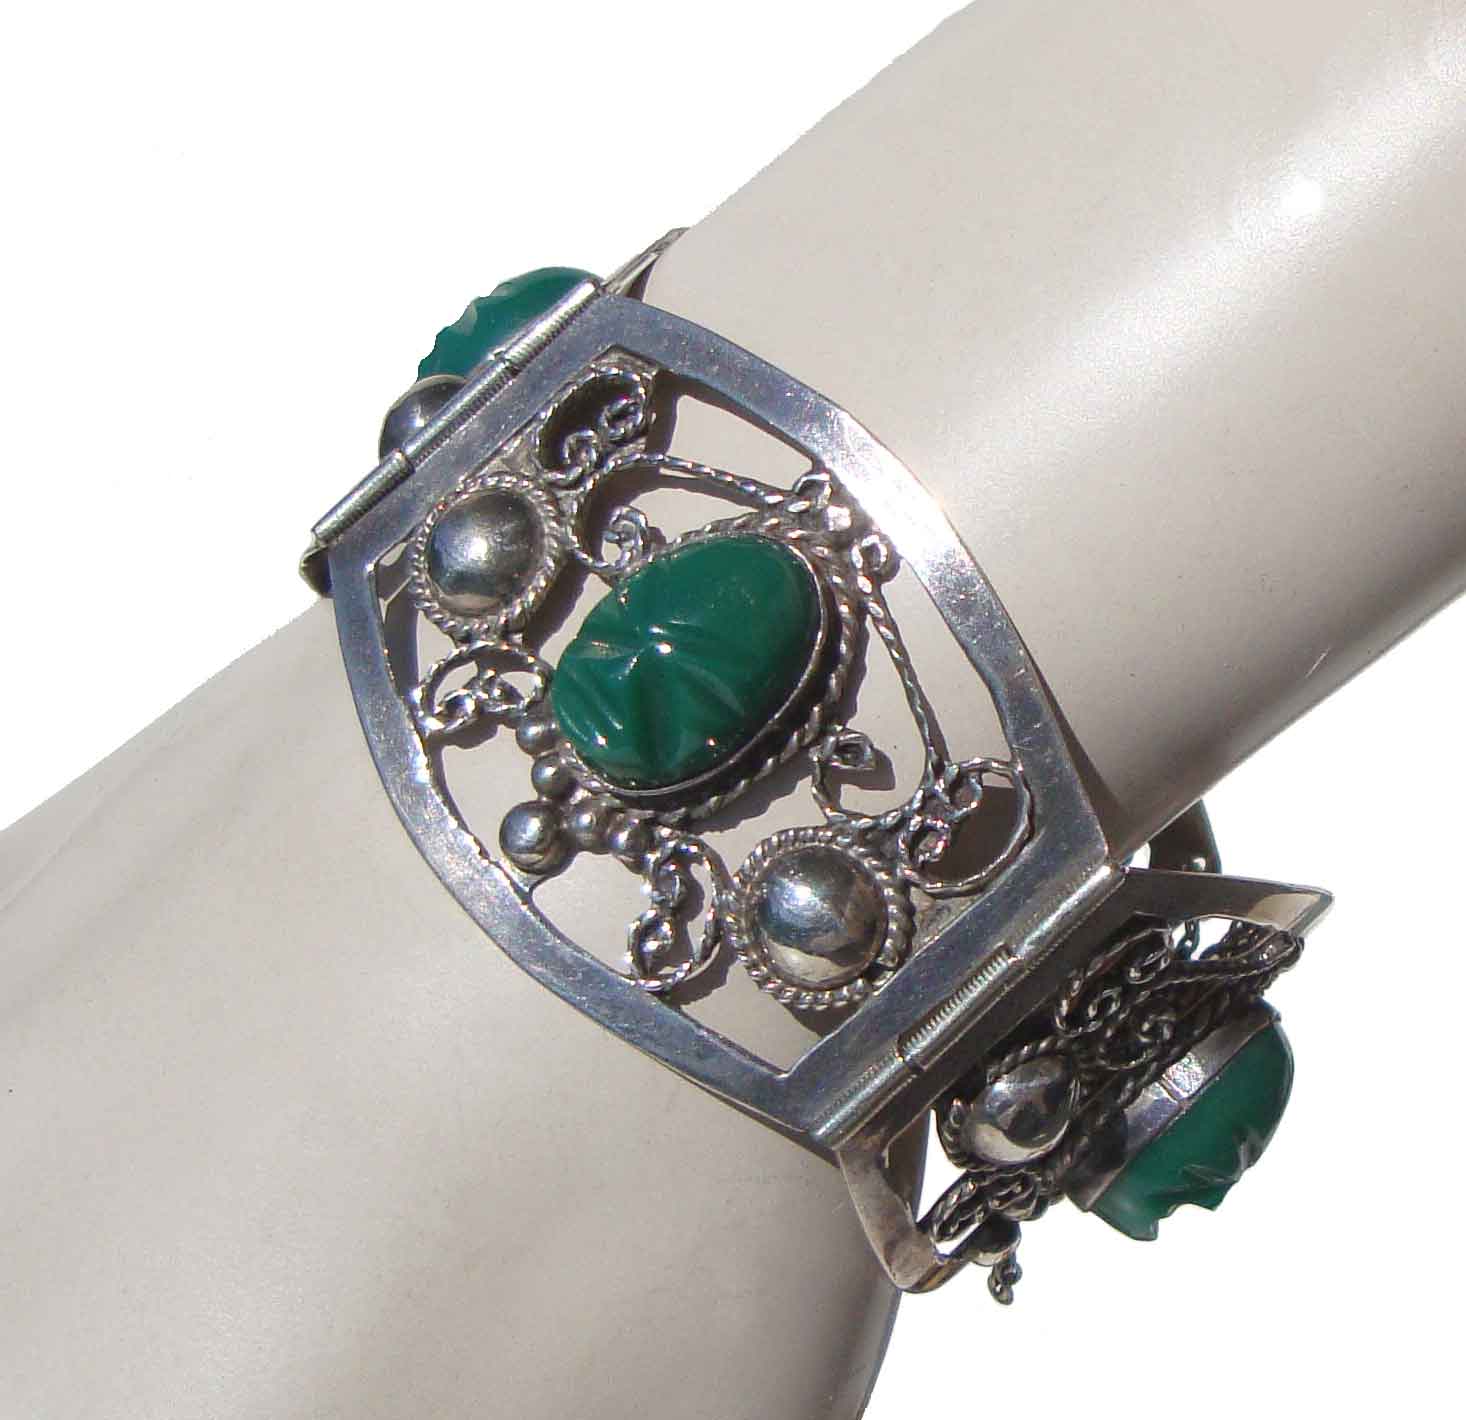 Green Clover | Mexican Bracelet